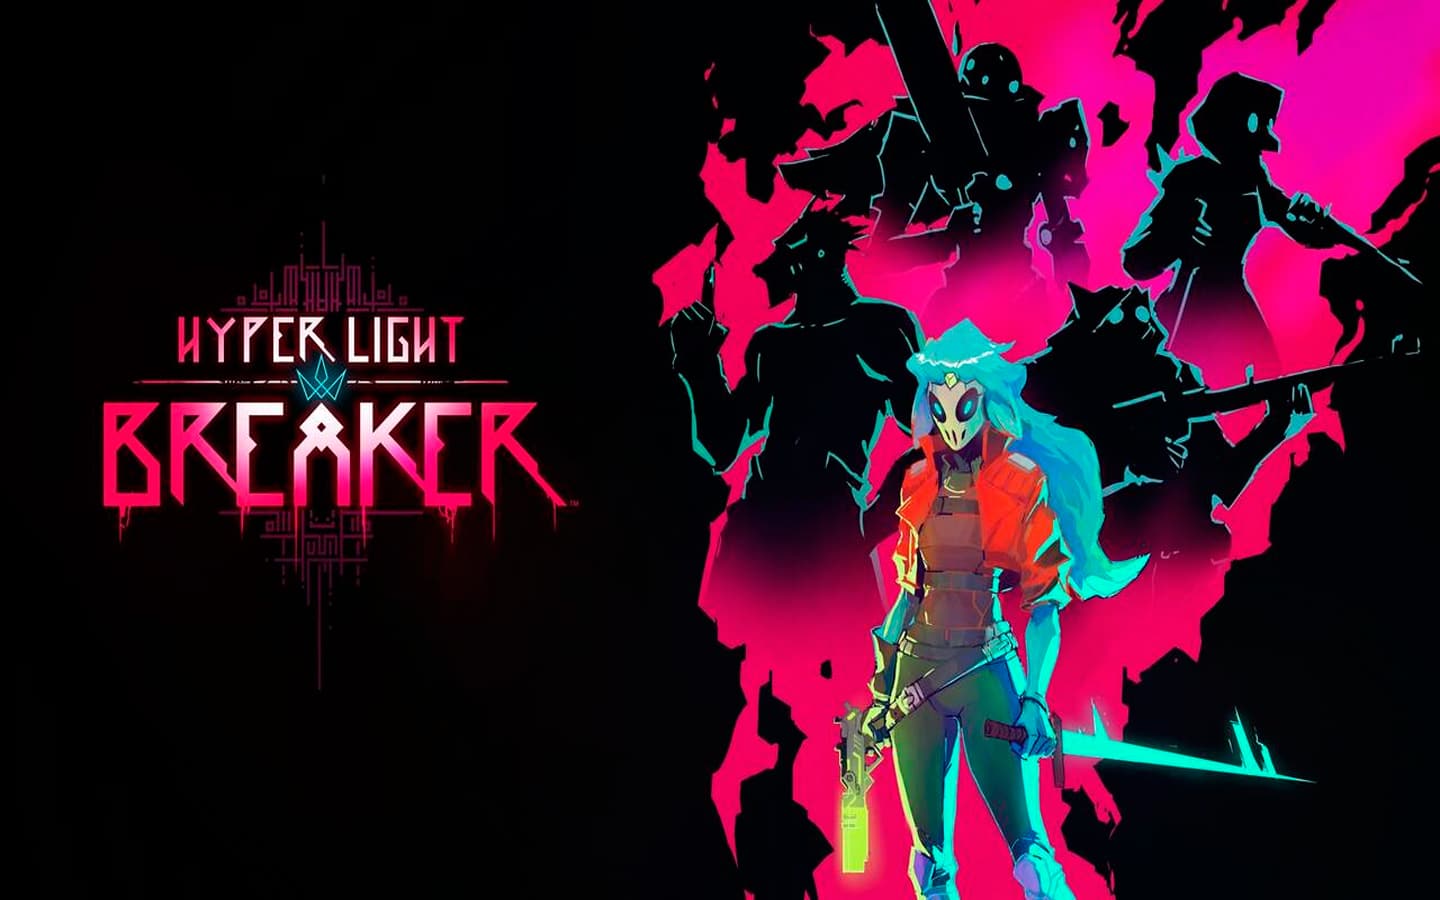 Hyper Light Breaker es la próxima secuela en 3D del famoso Hyper Light Drifter